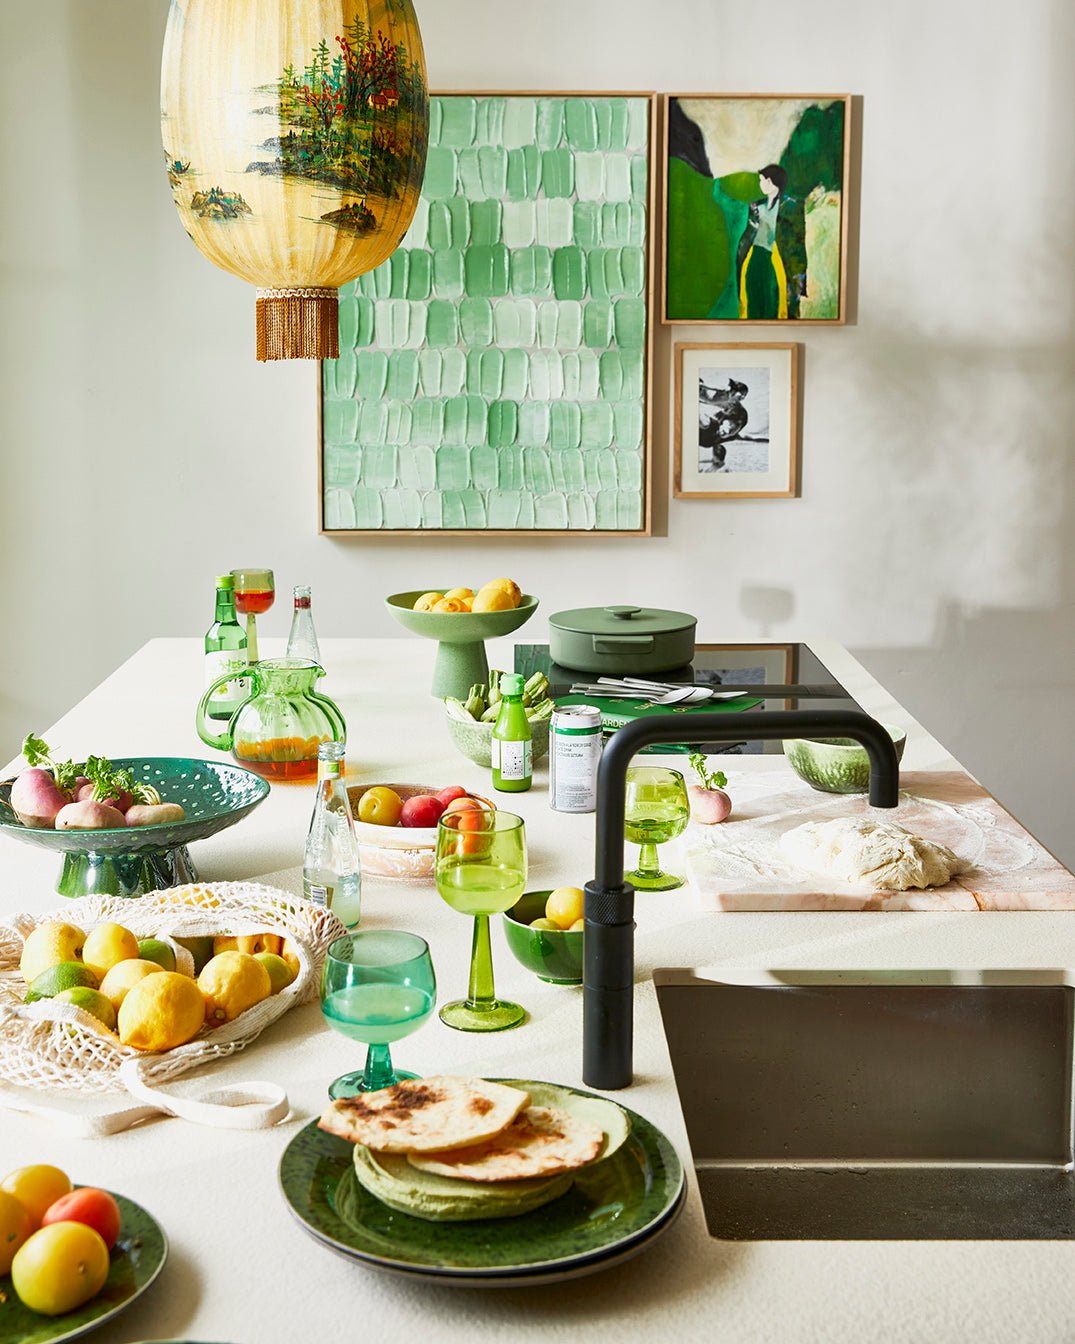 The Emeralds: ceramic bowl on base m - pistachio - Urban Nest